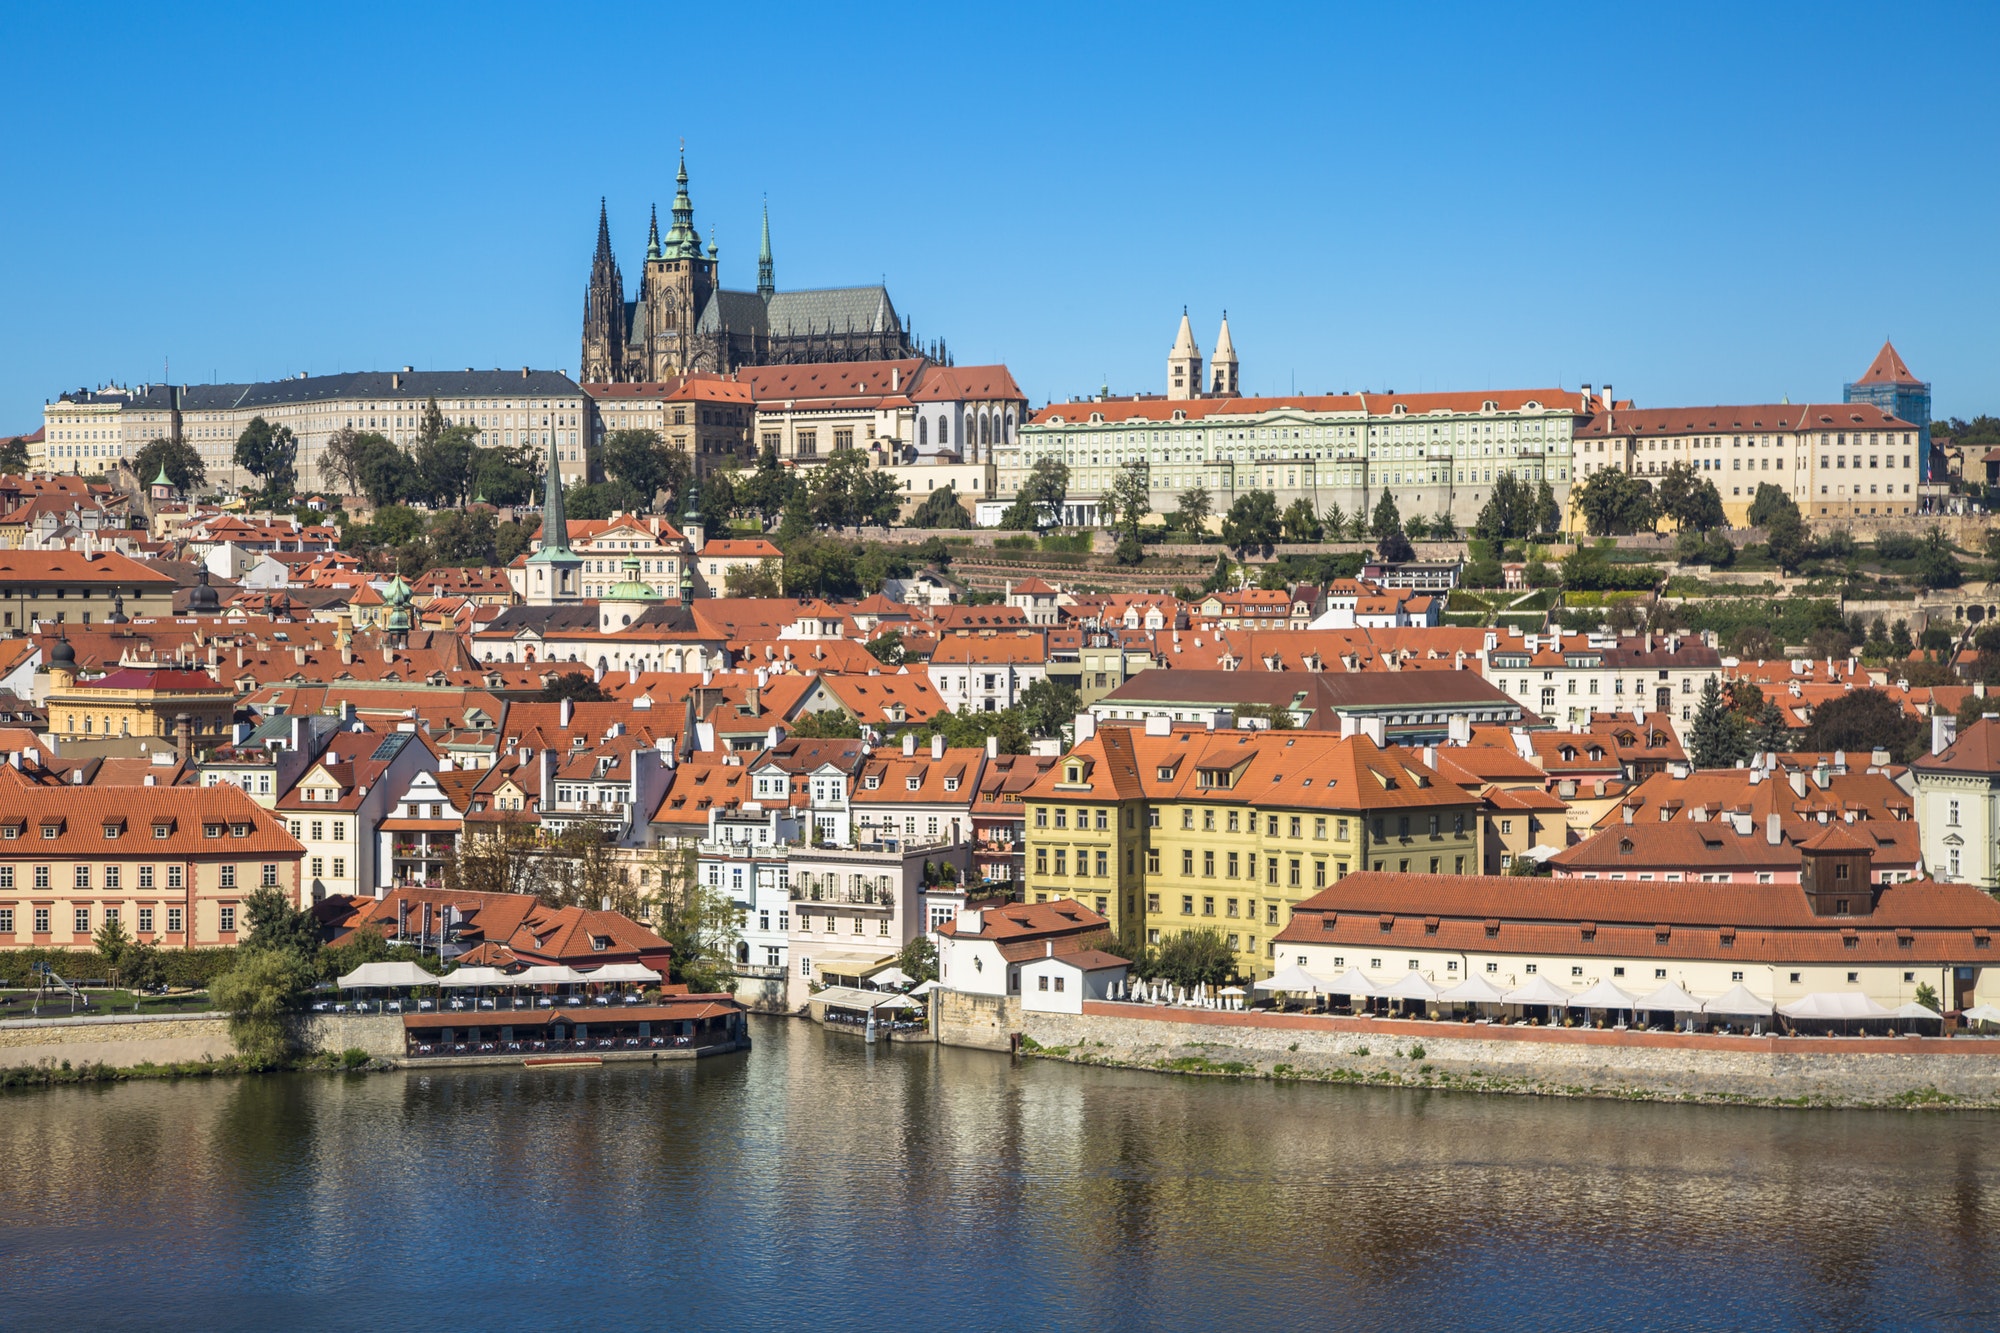 Old town of Prague and Prague castle, Czech Republic